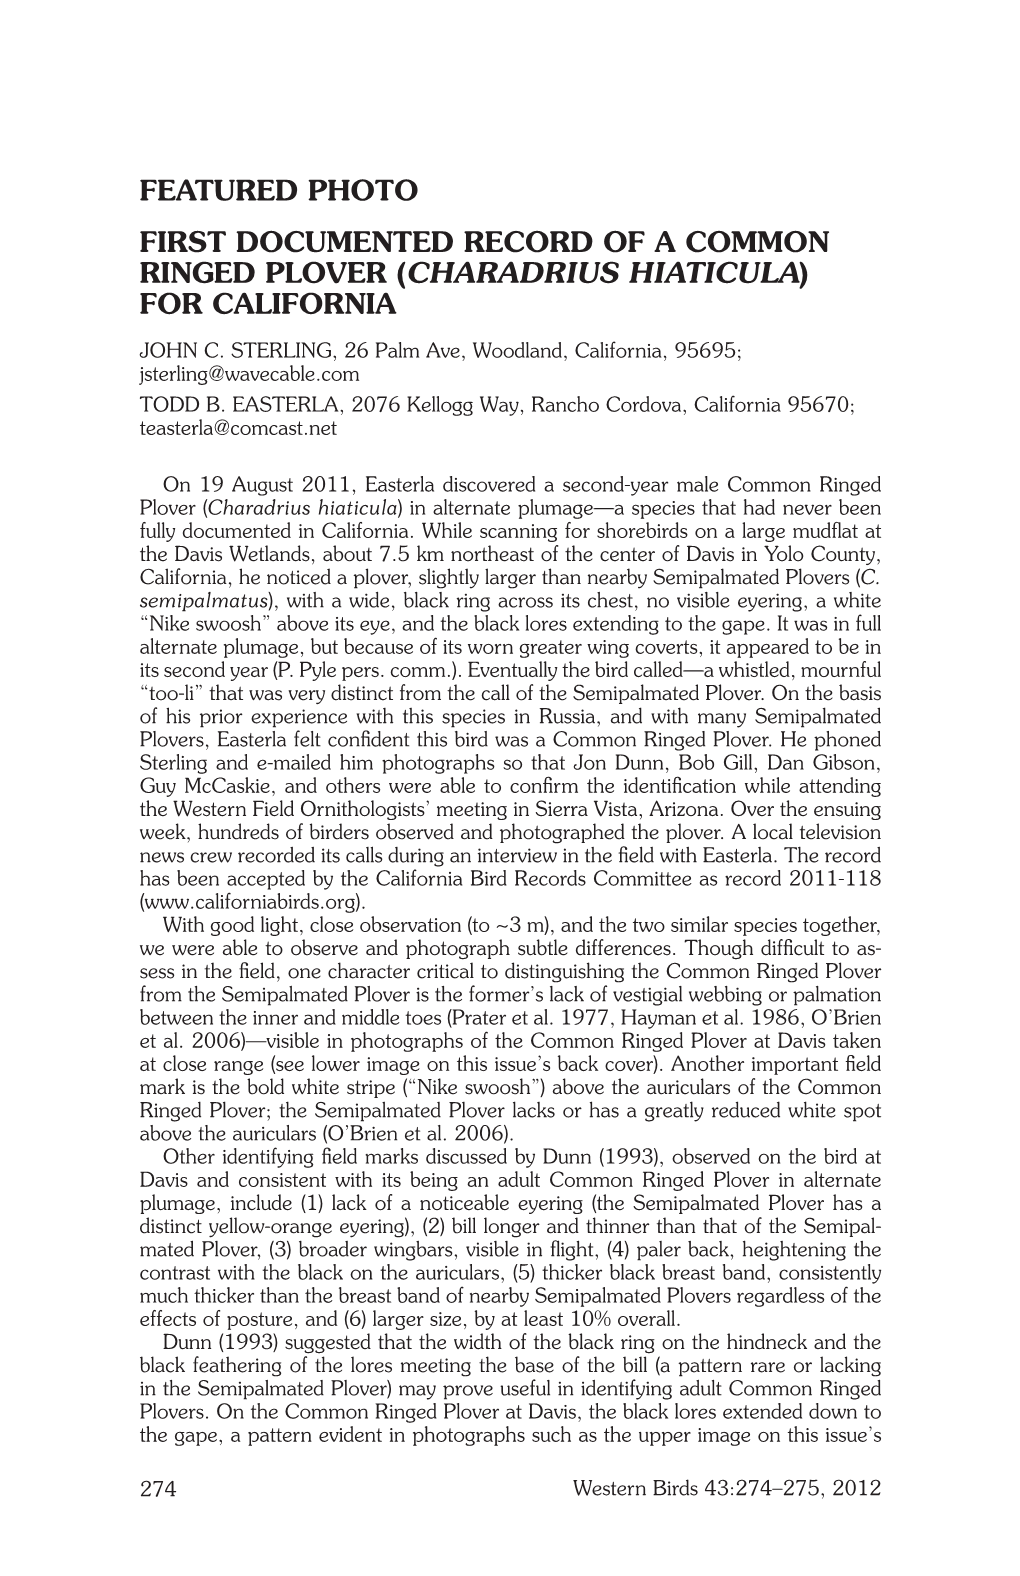 Charadrius Hiaticula) for California John C